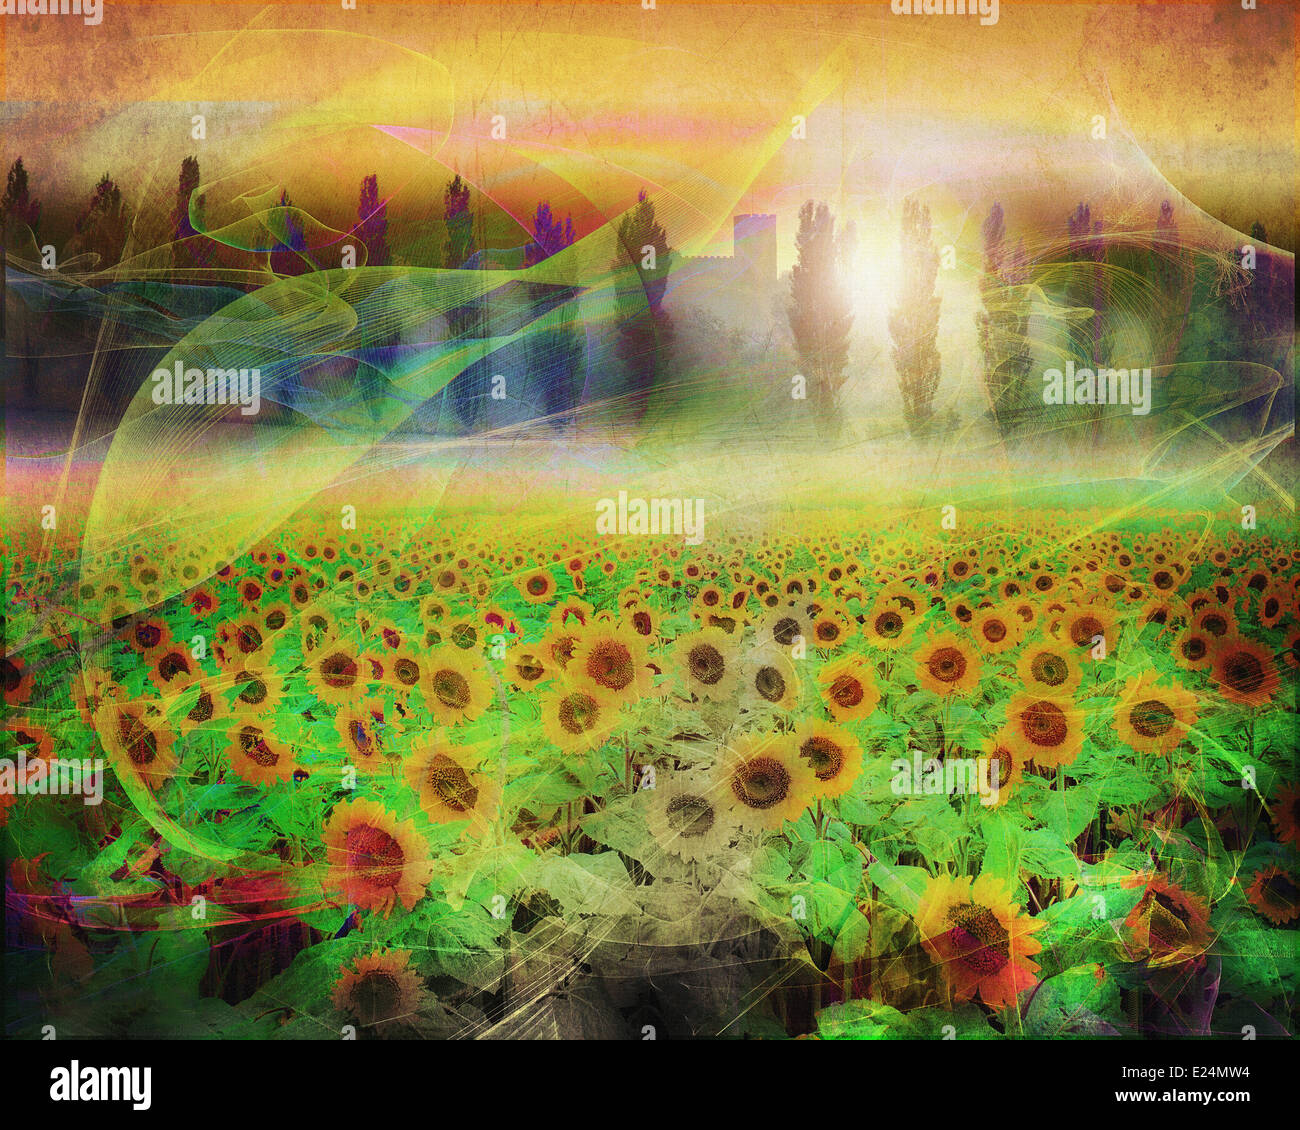 GB - LEICESTERSHIRE: Sonnenblumenfeld bei Breedon auf dem Hügel (Digitalkunst) Stockfoto